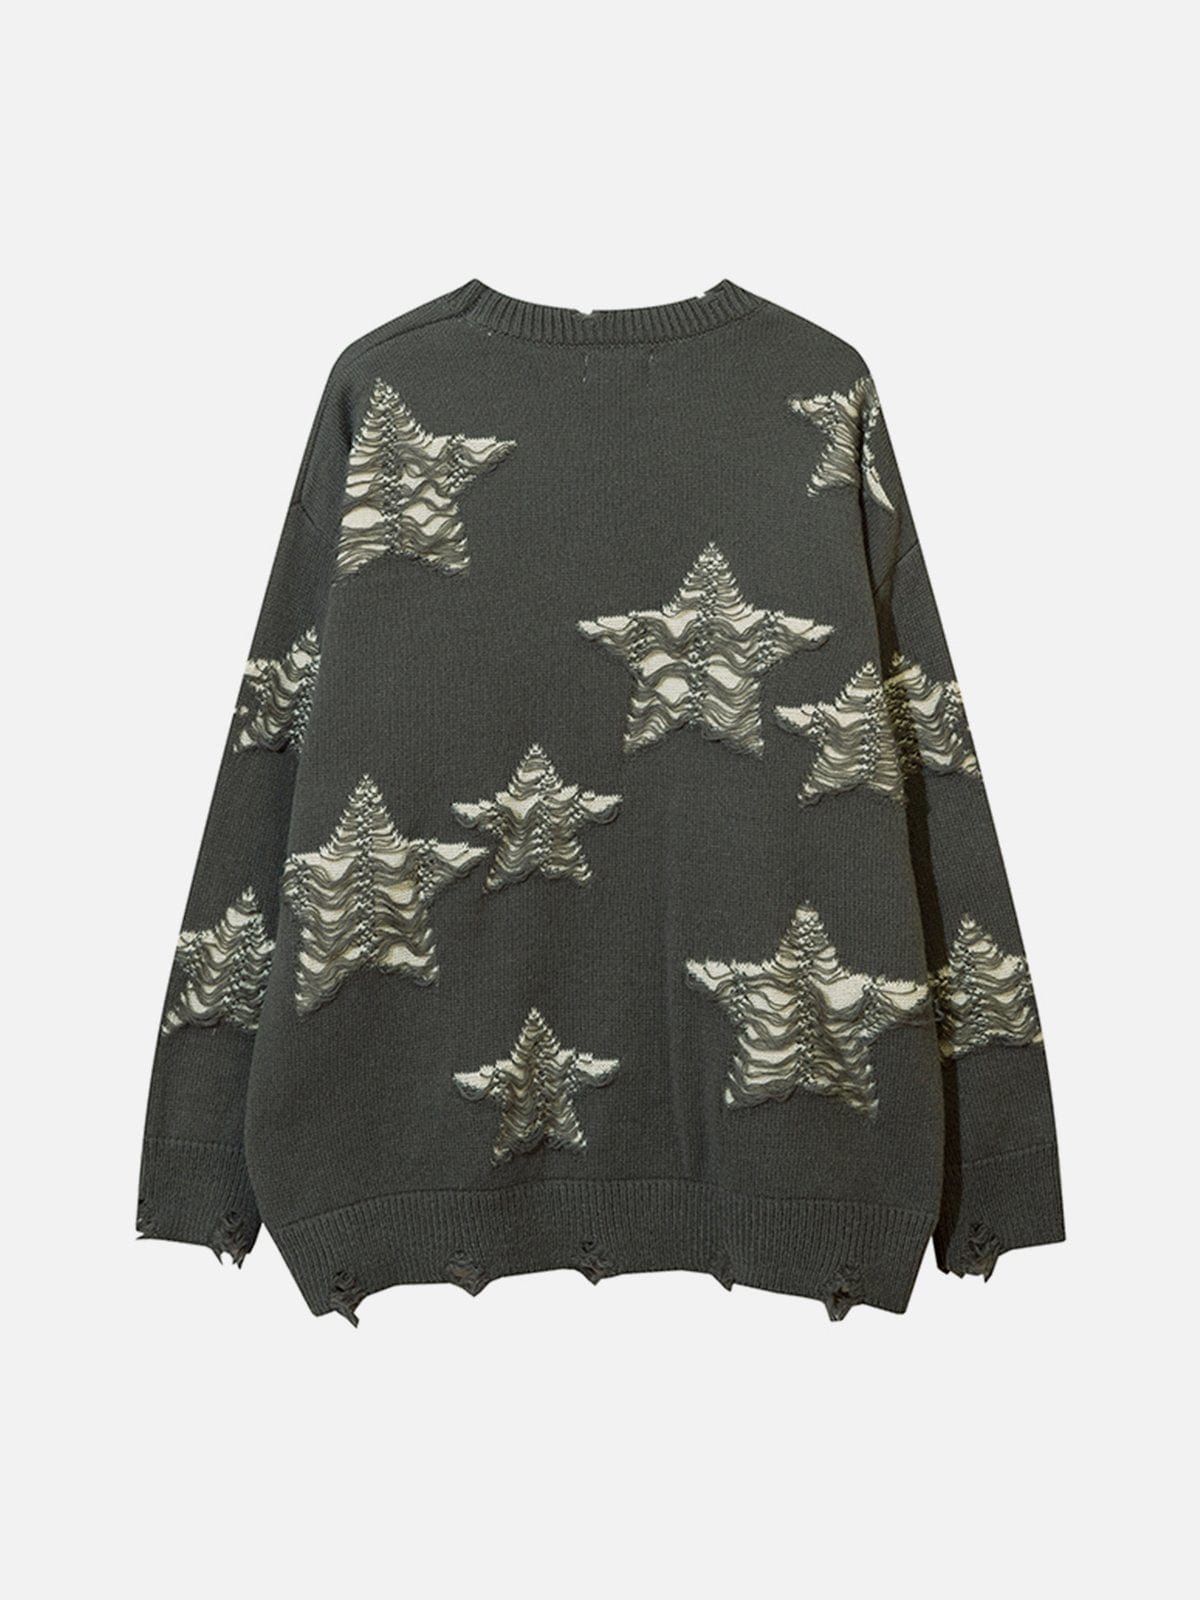 Hole Star Sweater Streetwear Brand Techwear Combat Tactical YUGEN THEORY